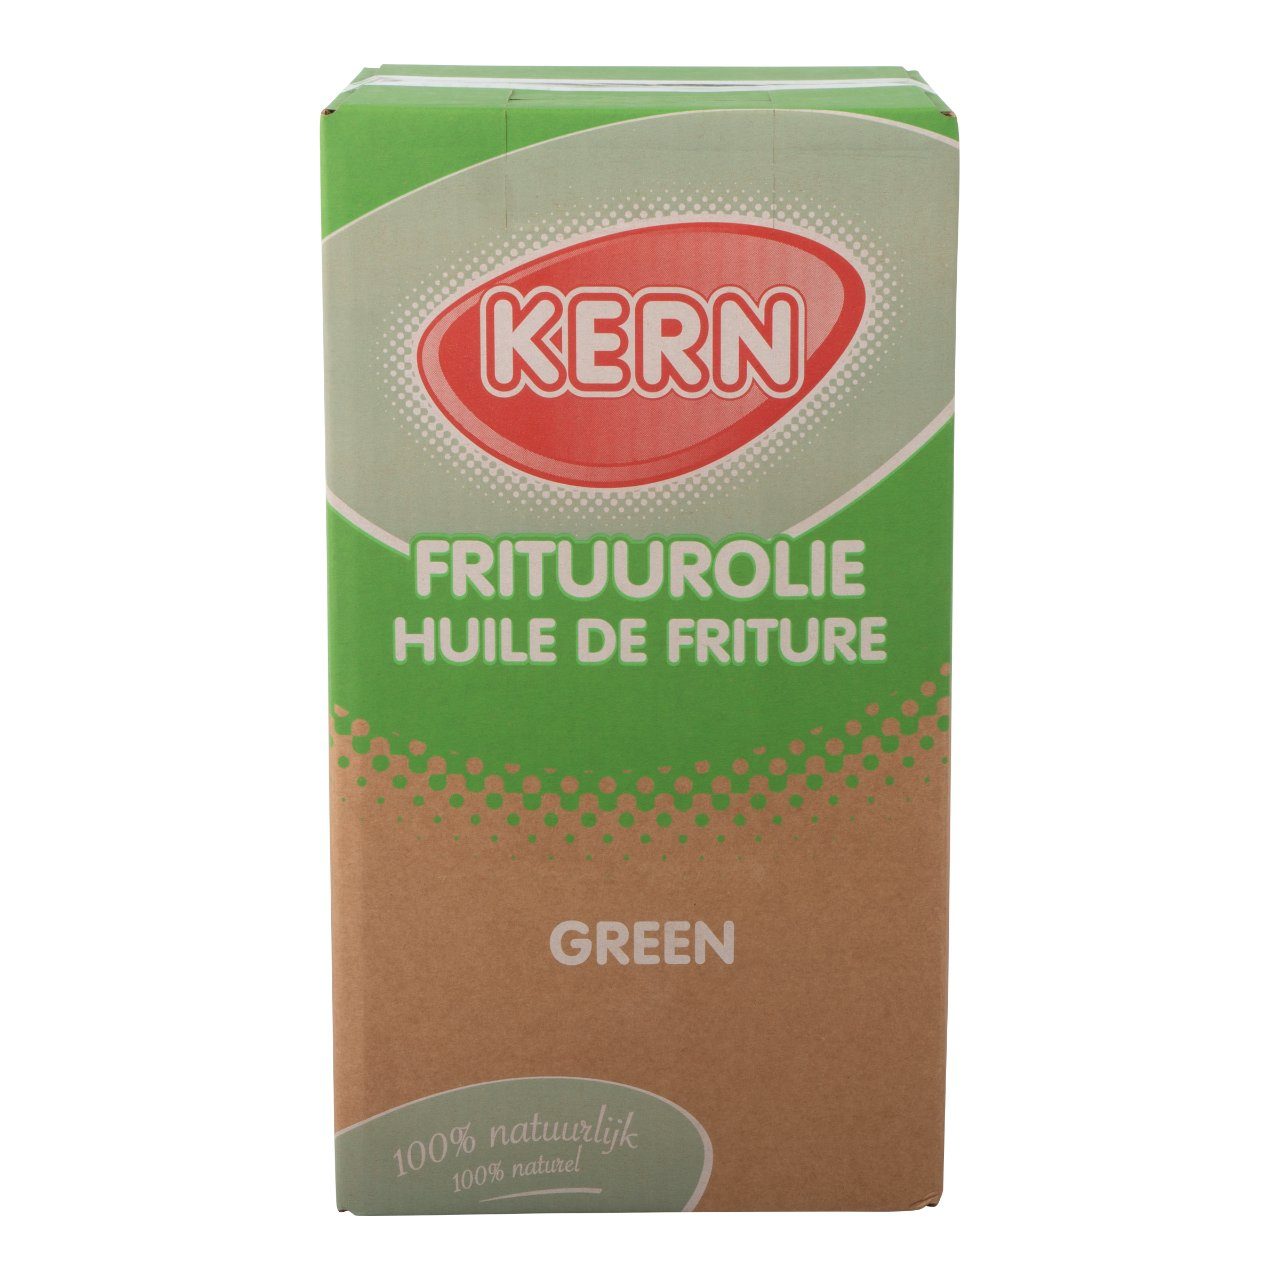 Frituurolie green bag in box